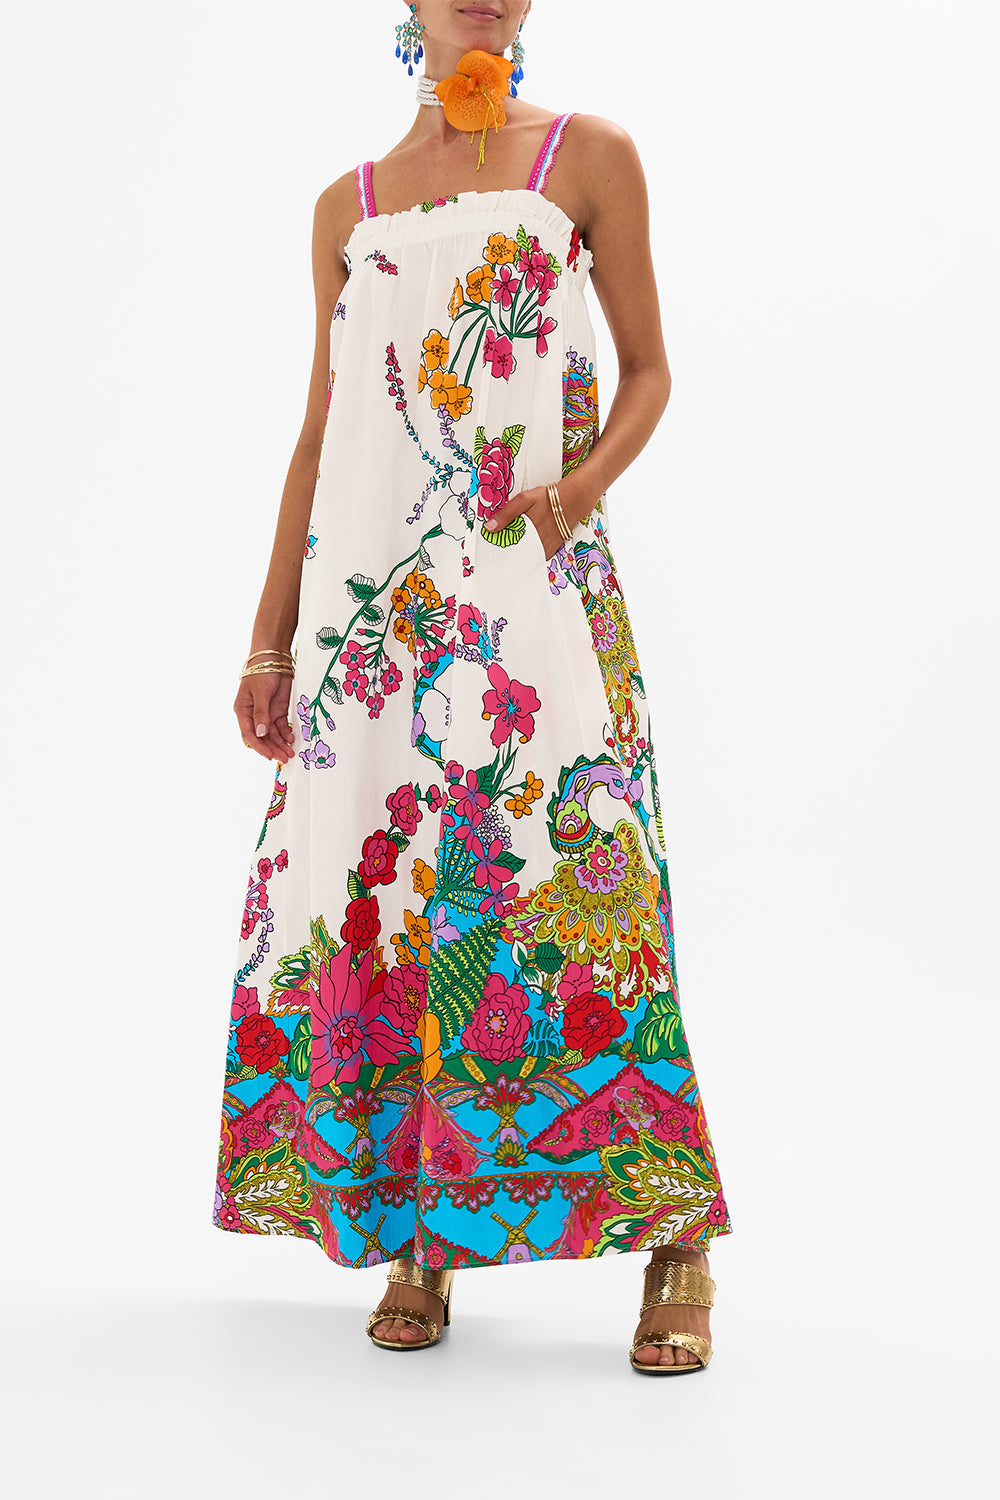 CAMILLA retro floral wide strap sun dress in Cosmic Prairie print 